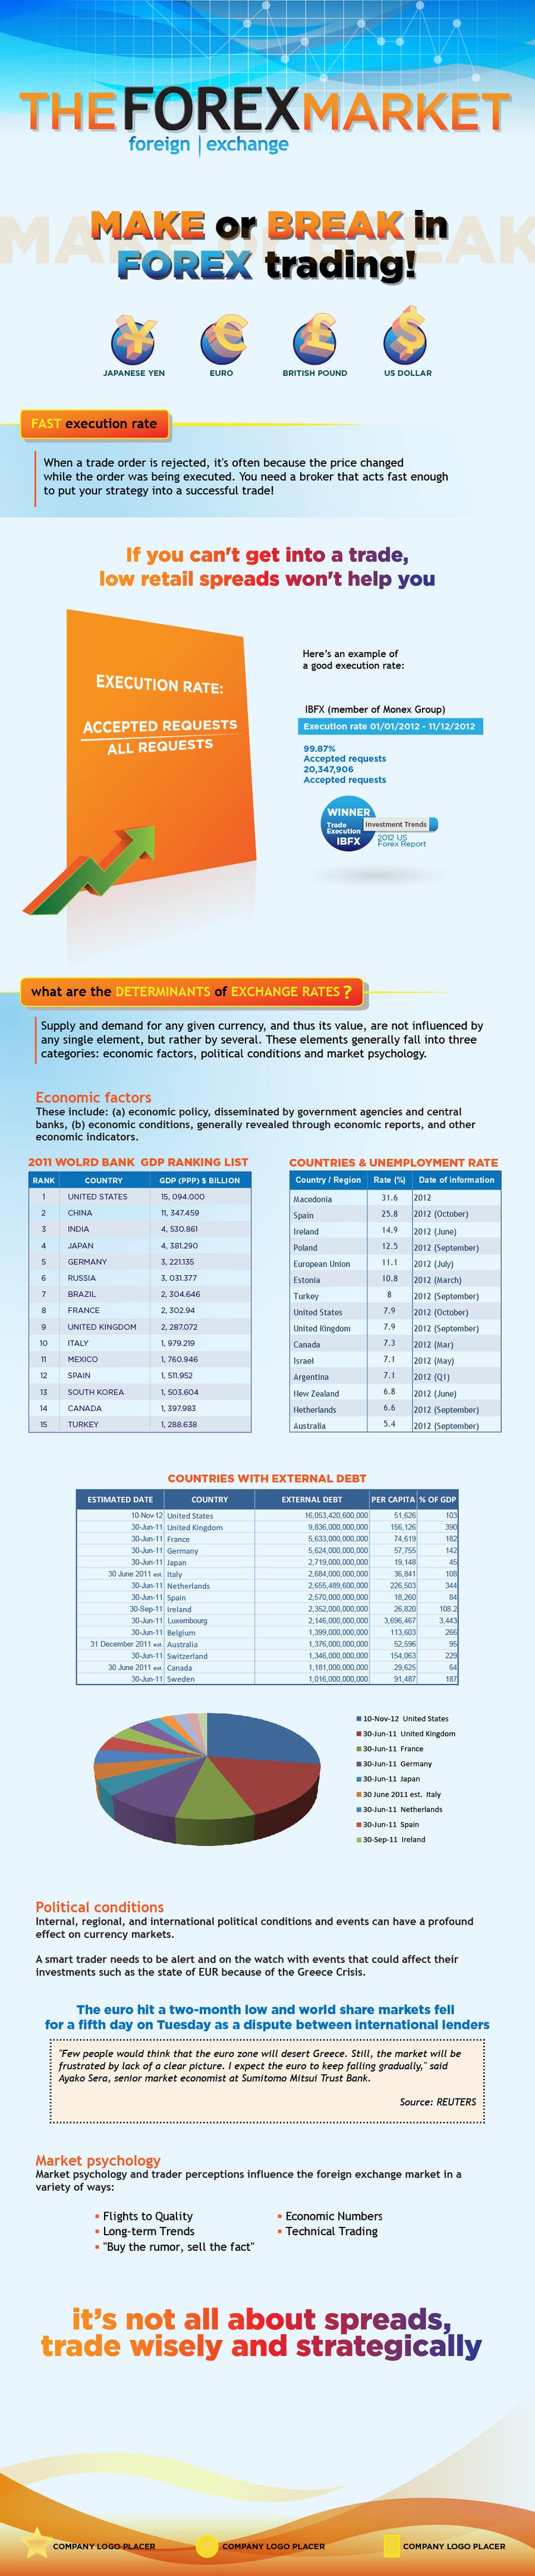 Kilpailutyö #16 kilpailussa                                                 Infographic creation: Influences on foreign exchange market (forex) trading
                                            